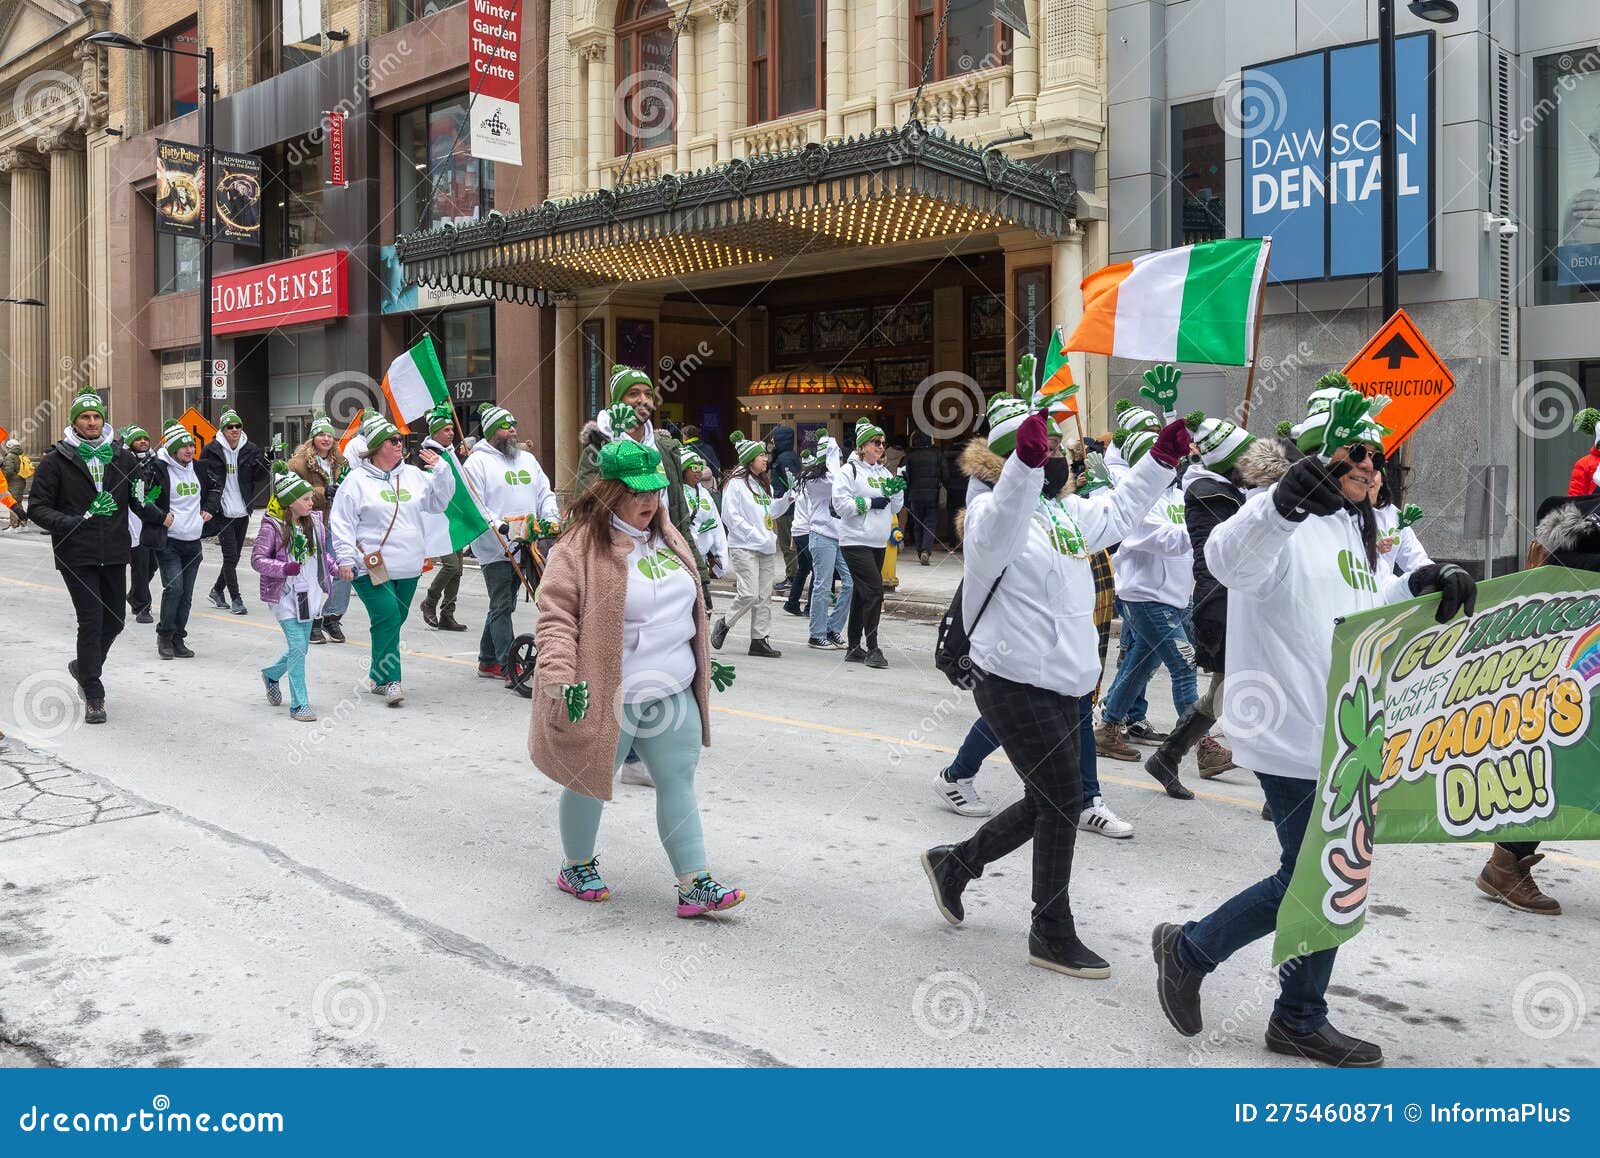 St. Patrick's Day Parade Toronto 2023 